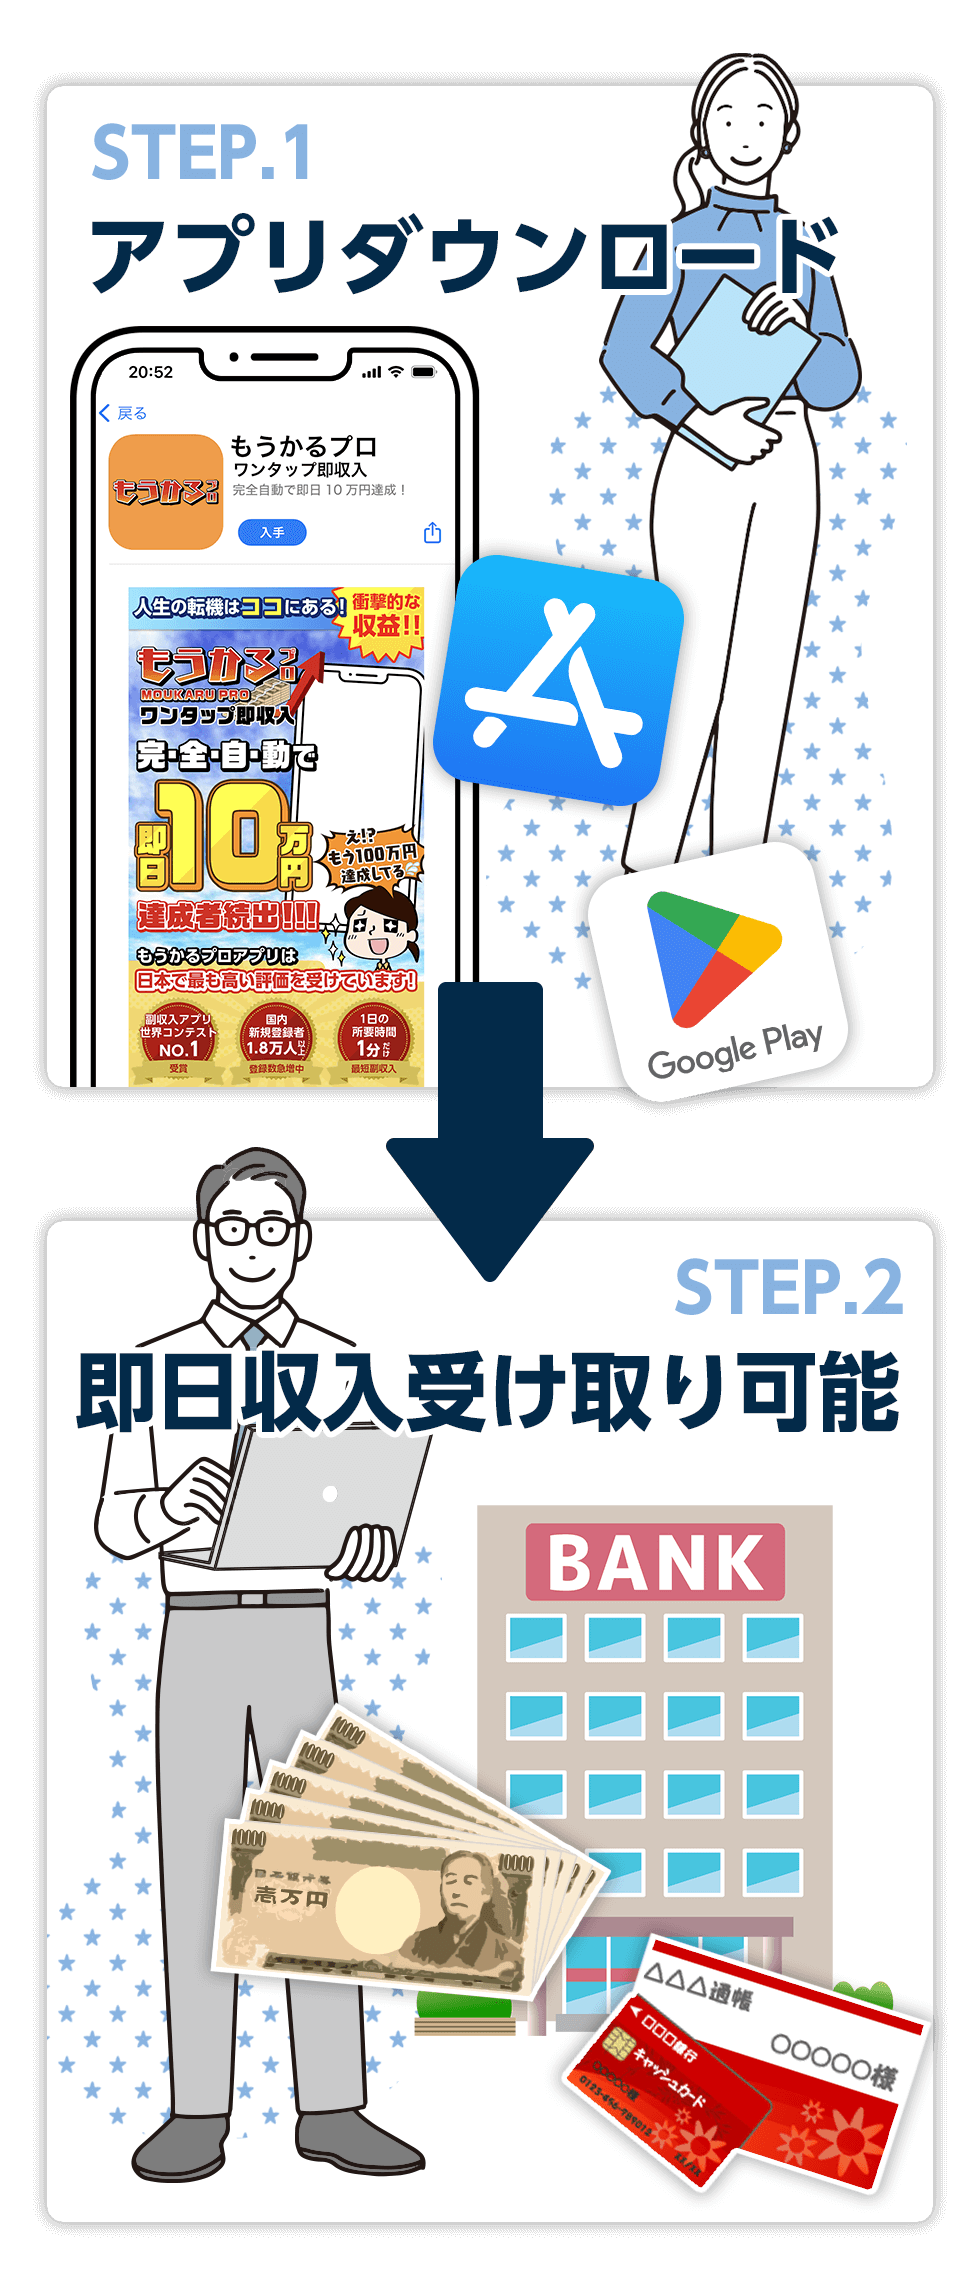 STEP.1 アプリダウンロード　STEP.2 即日収入受け取り可能